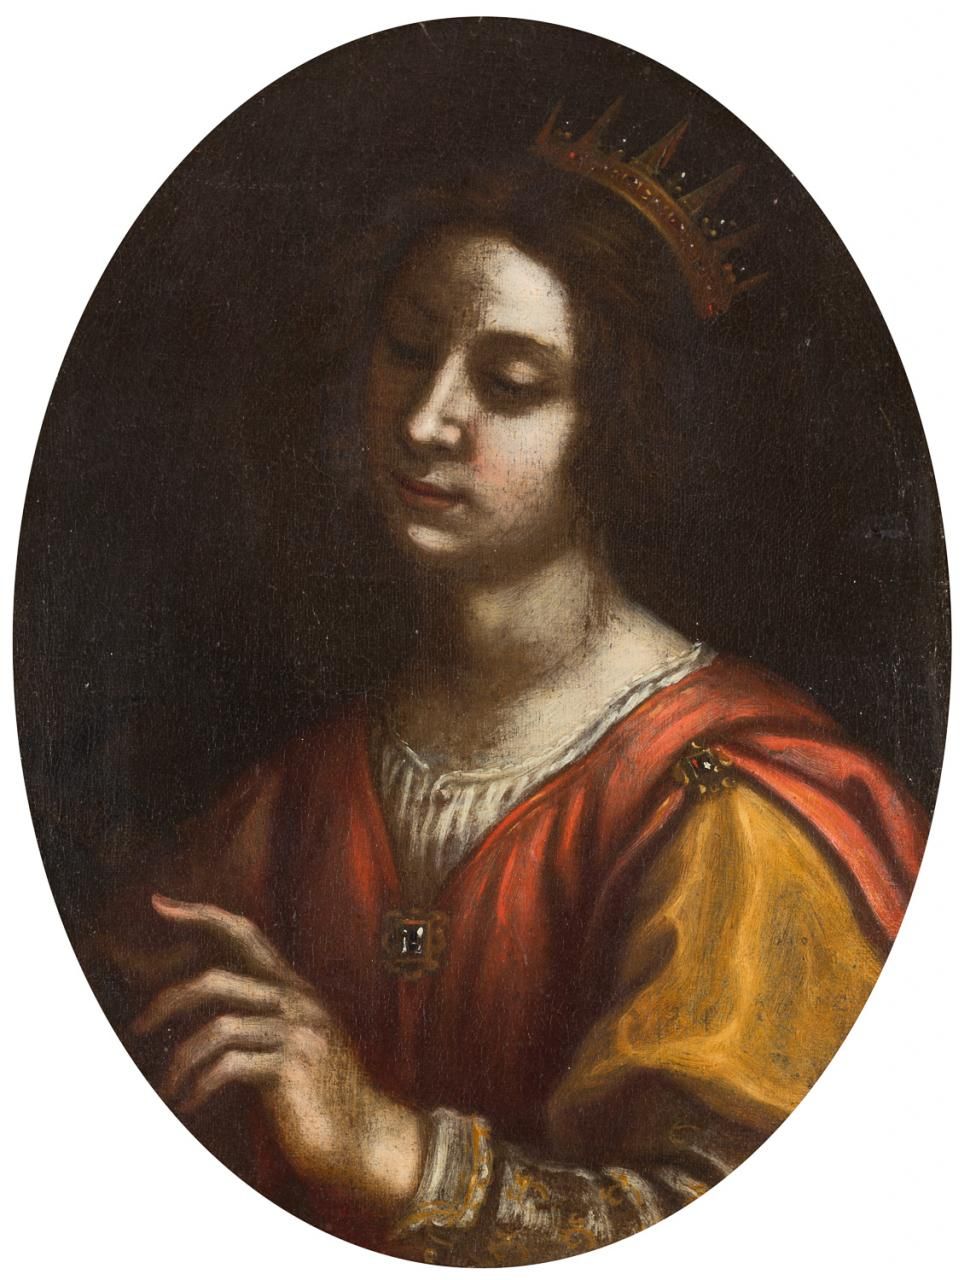 ESCUELA ESPAÑOLA S. XVII 亚历山大的圣凯瑟琳
布面油画
54 x 41 cm